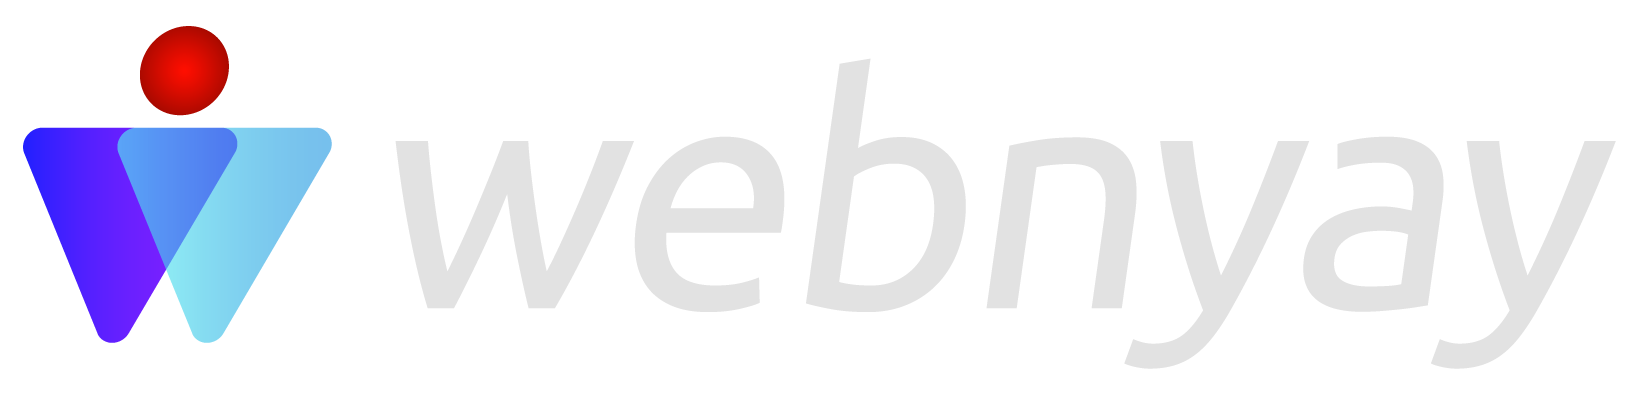 webnyay logo